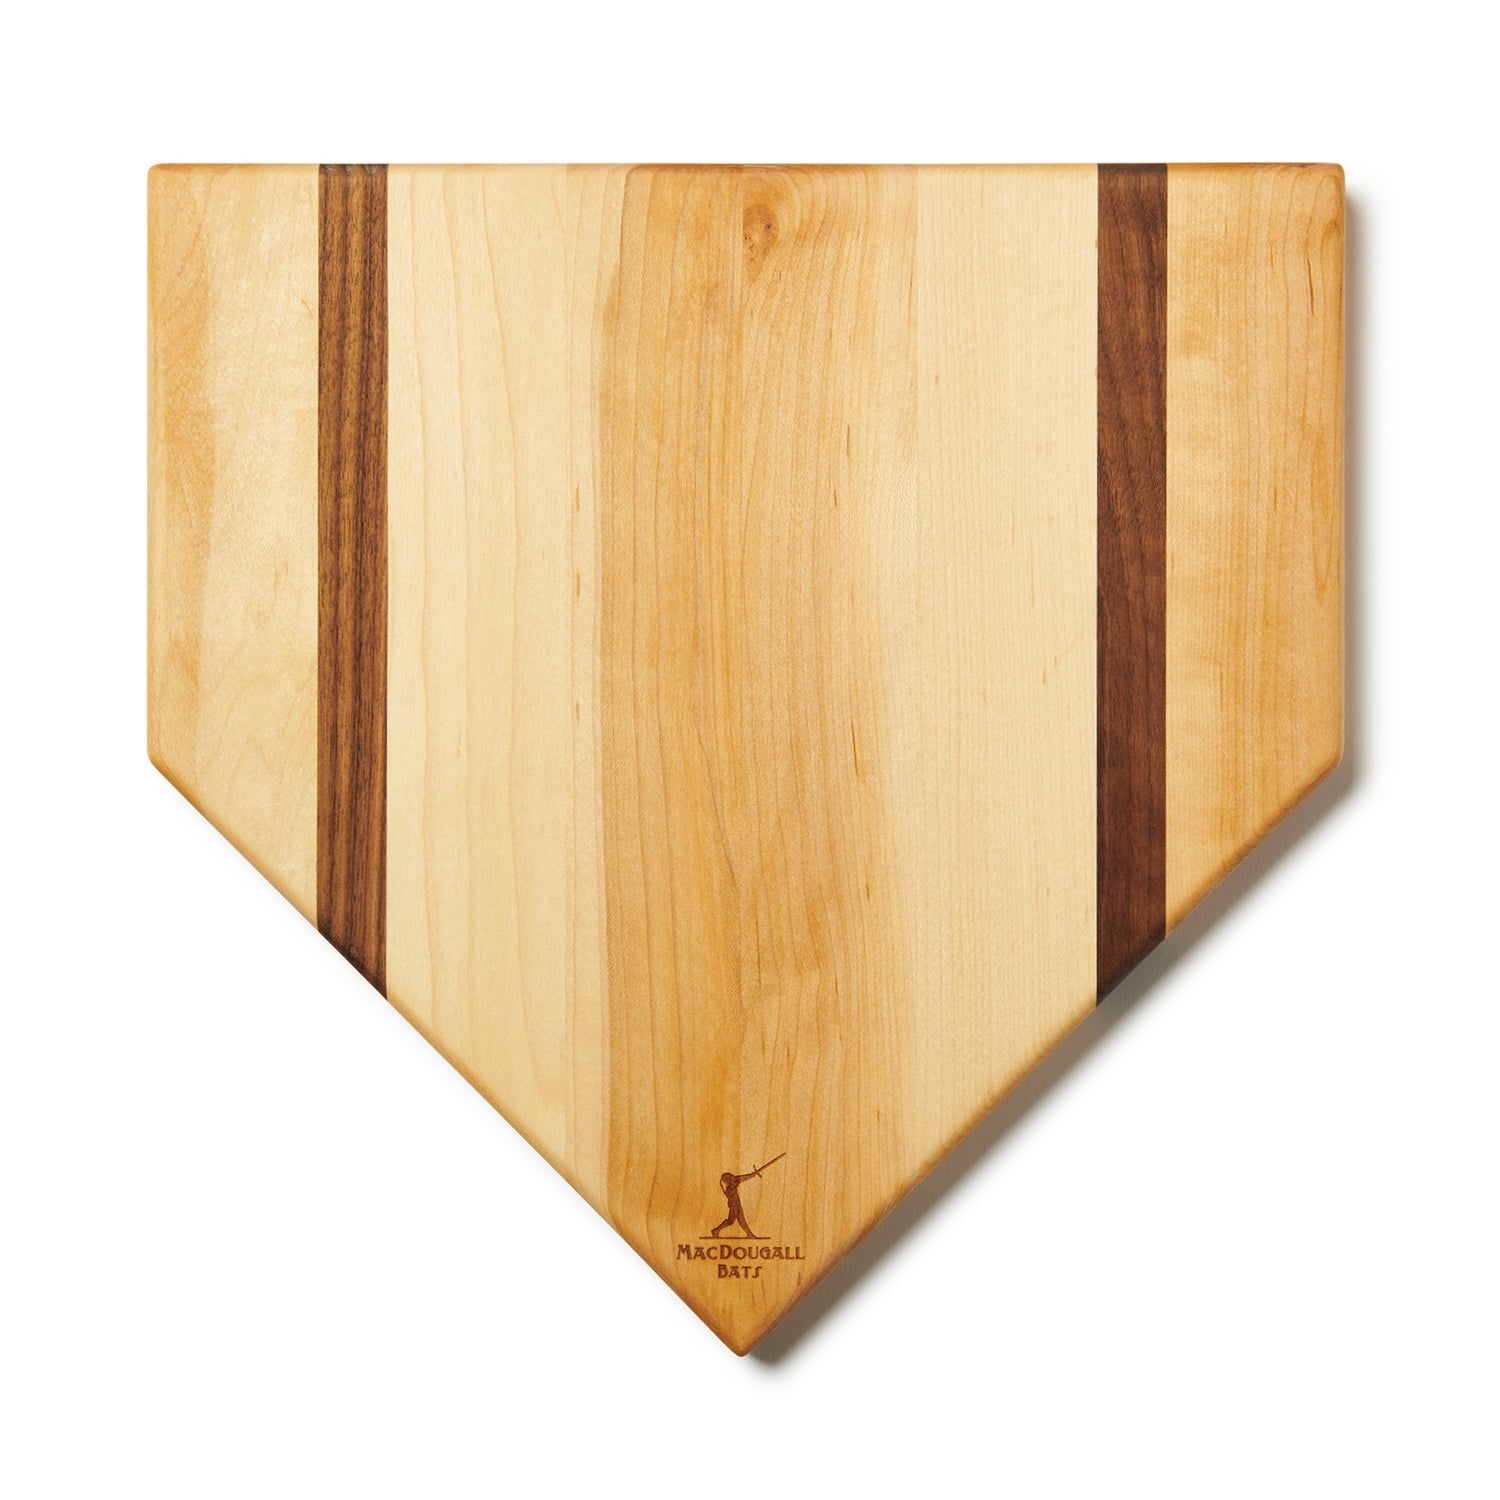 Home Plate Cutting Board - MacDougall Bats